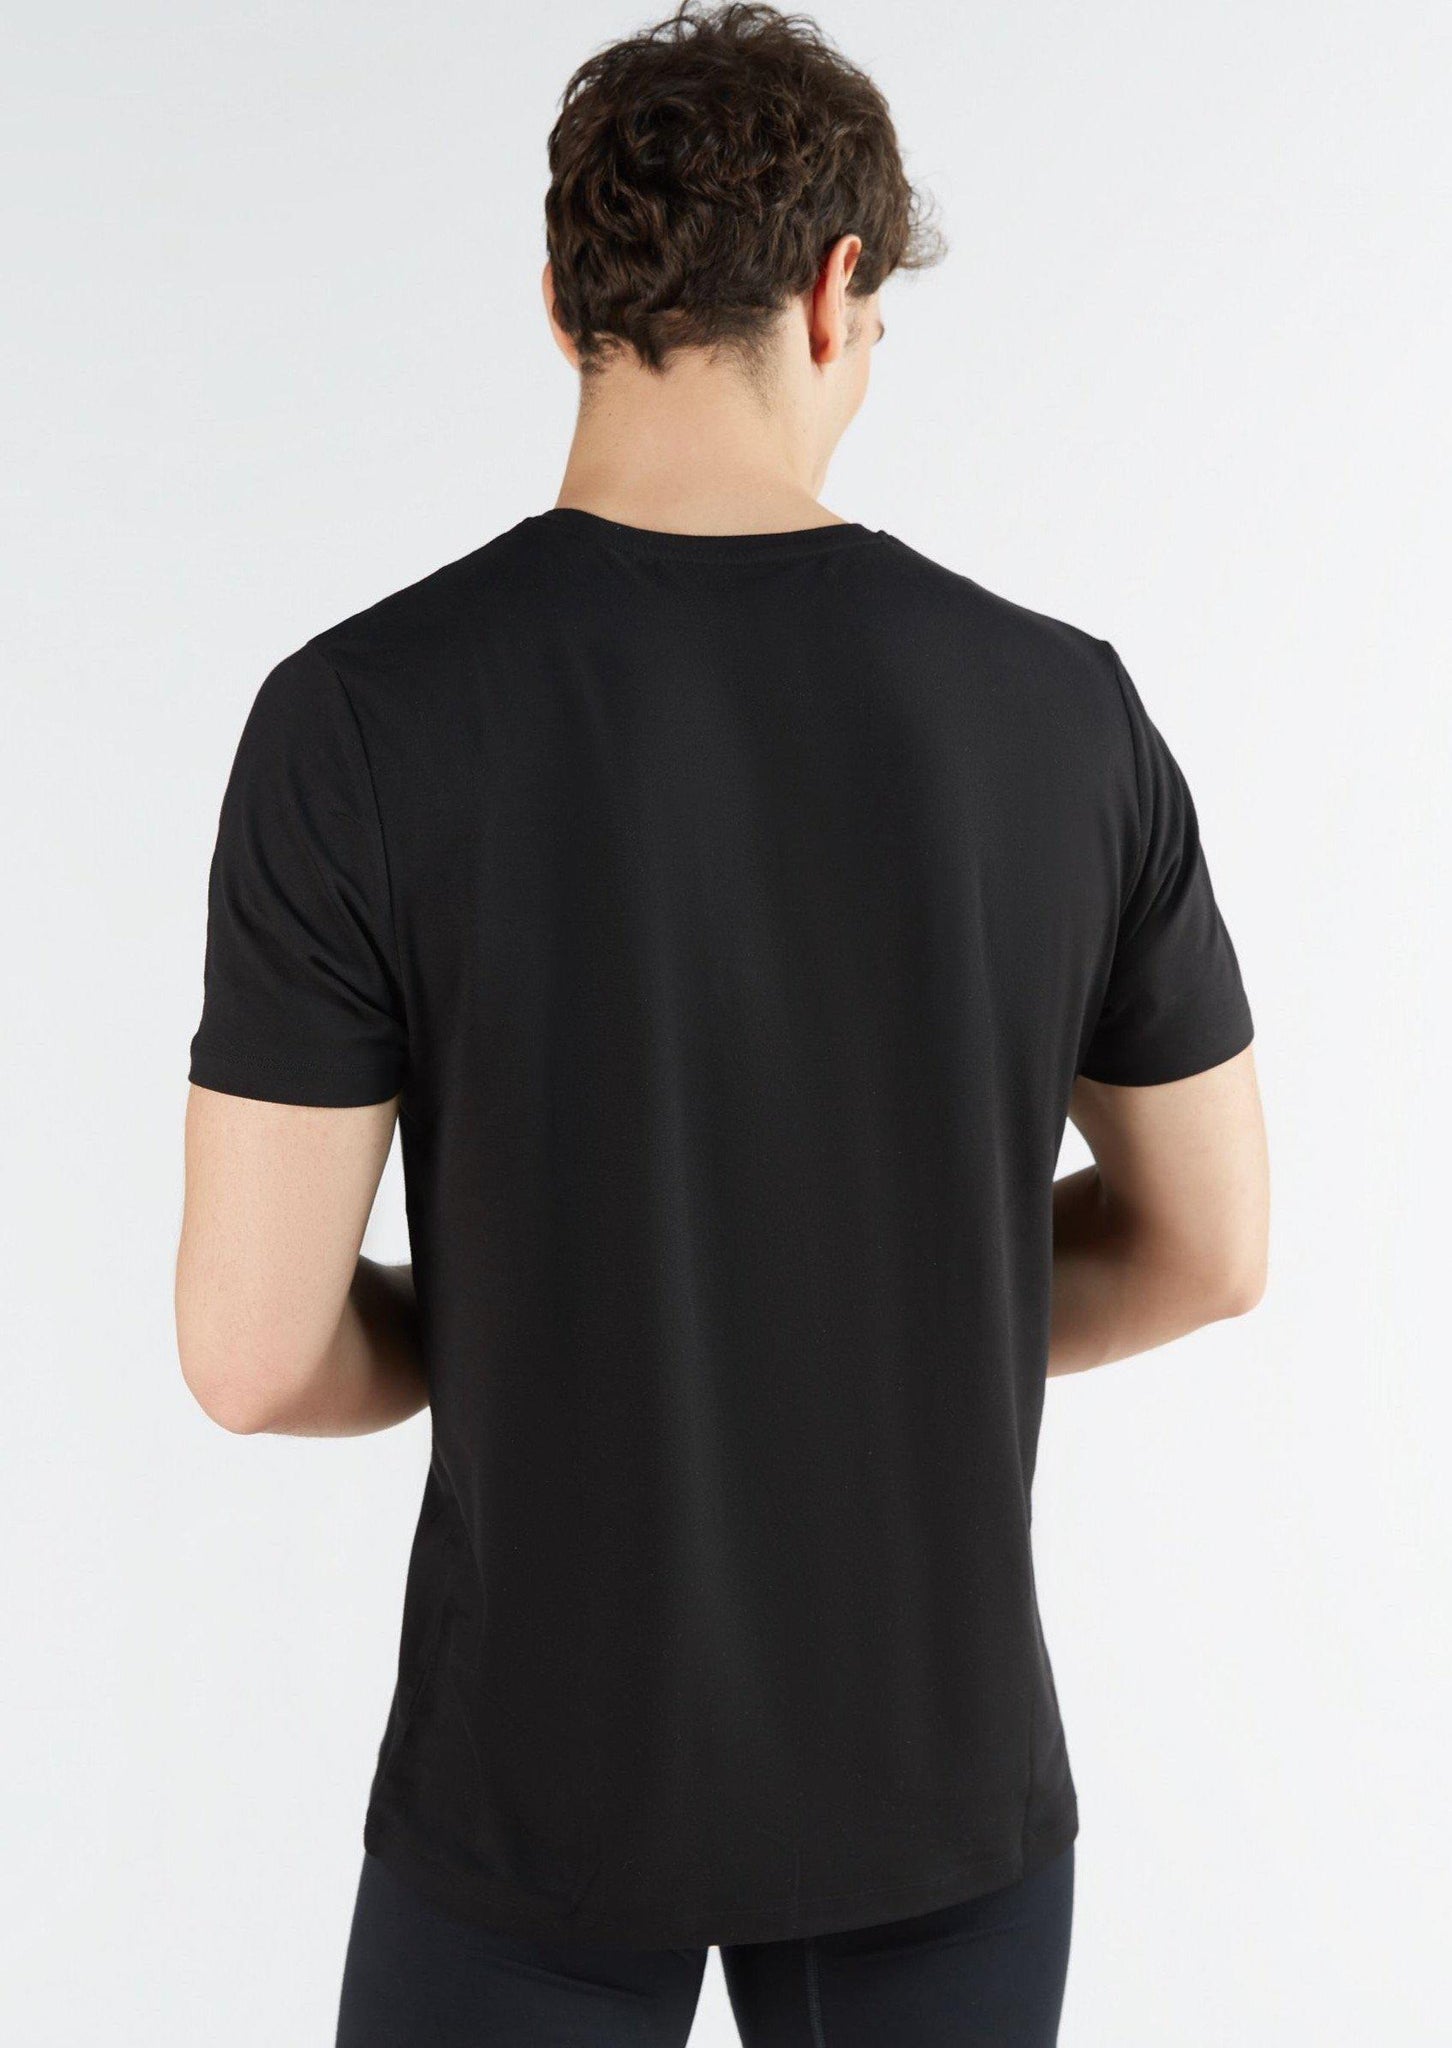 Men's Organic Cotton Short-Sleeve Basic T-shirt 3-Pack